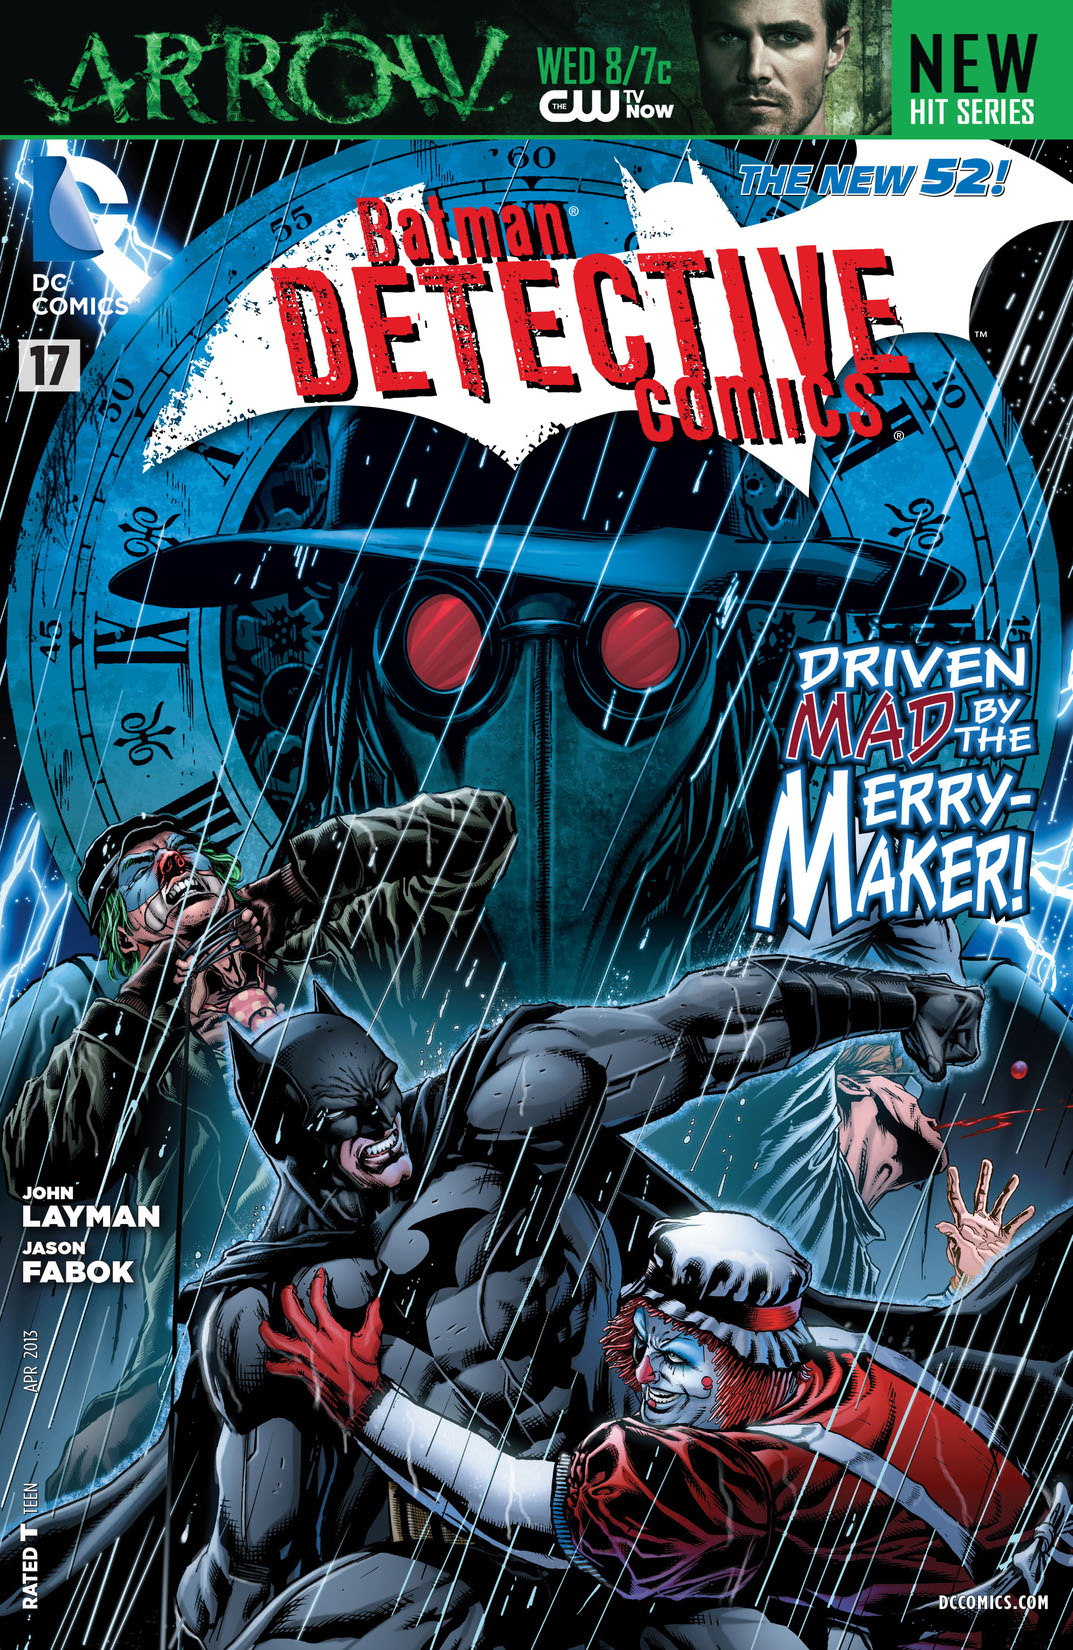 Detective Comics (2011-) #17 preview images